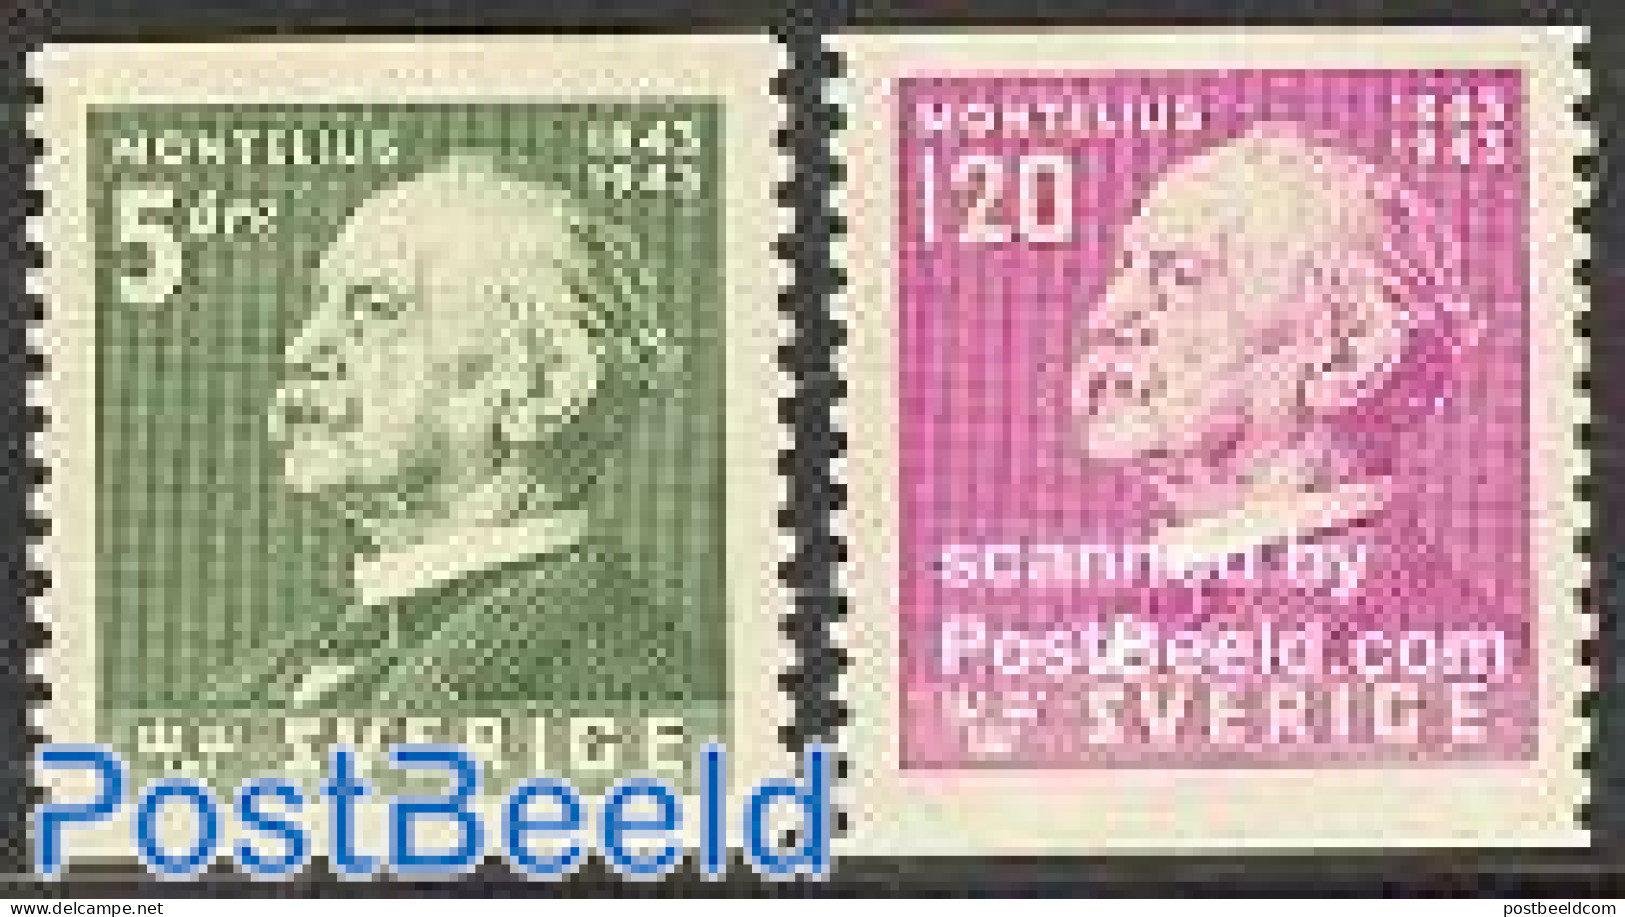 Sweden 1943 O. Montelius 2v, Mint NH - Unused Stamps